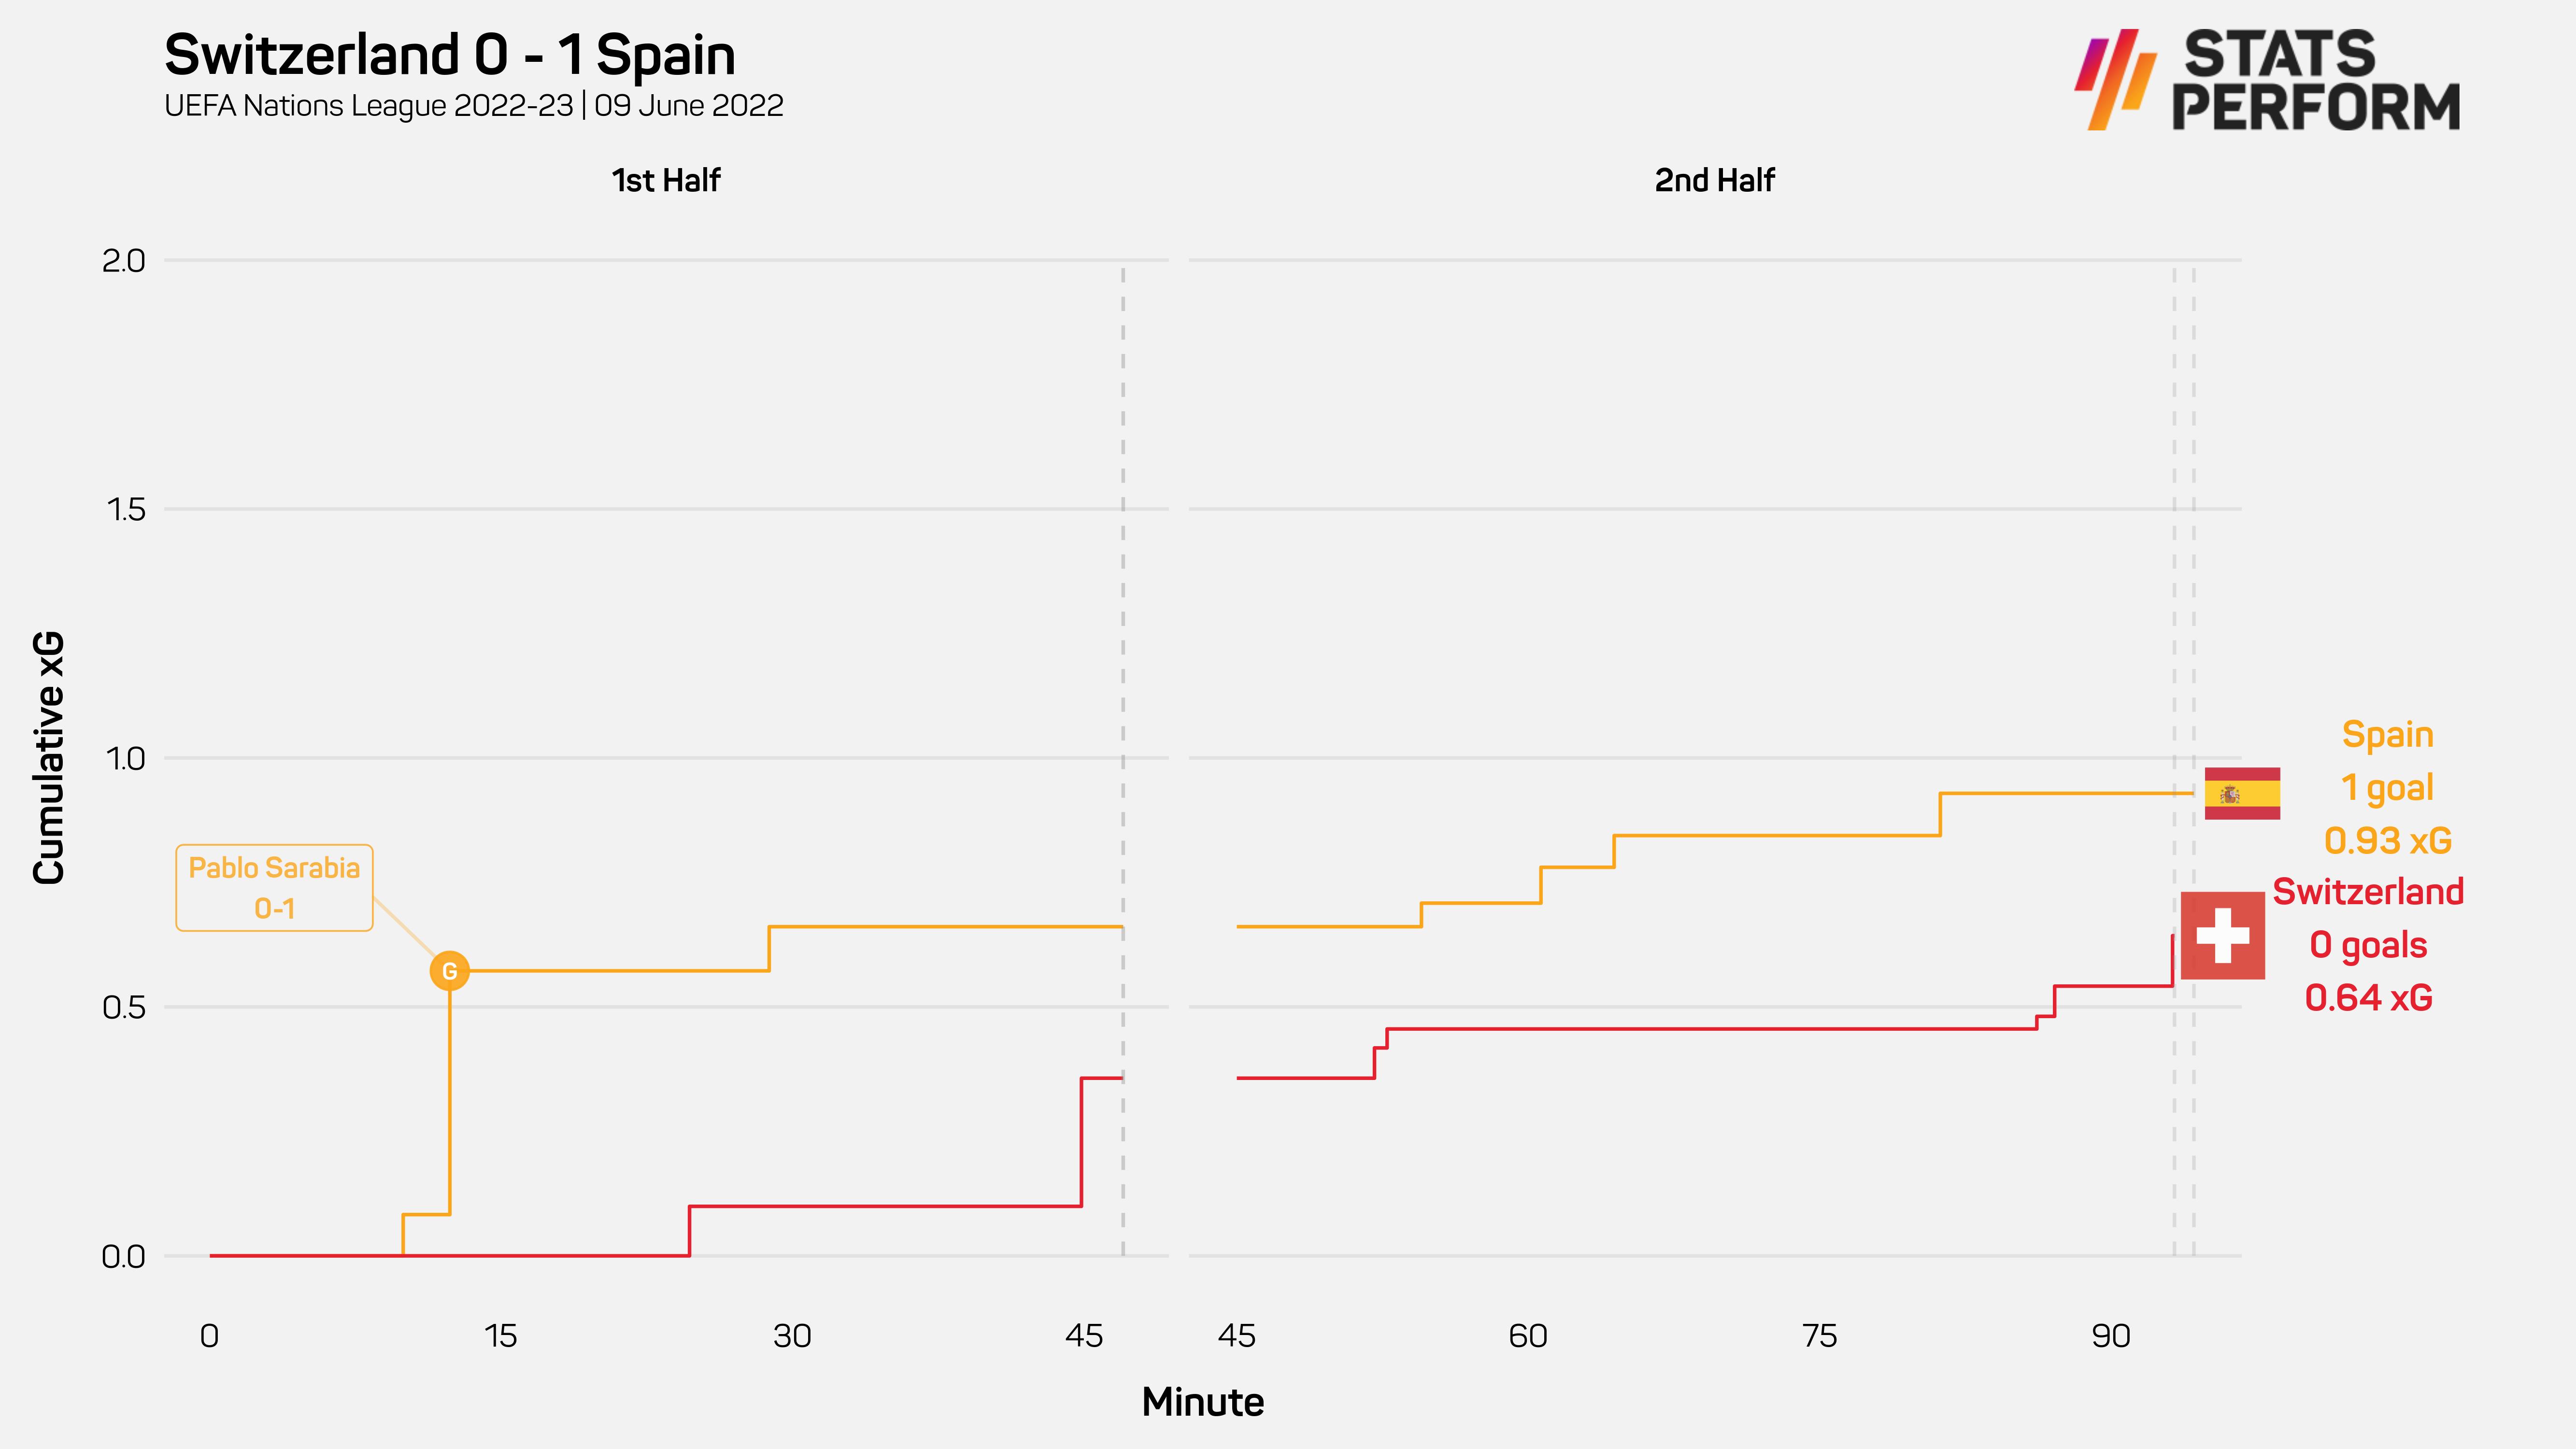 Switzerland 0-1 Spain